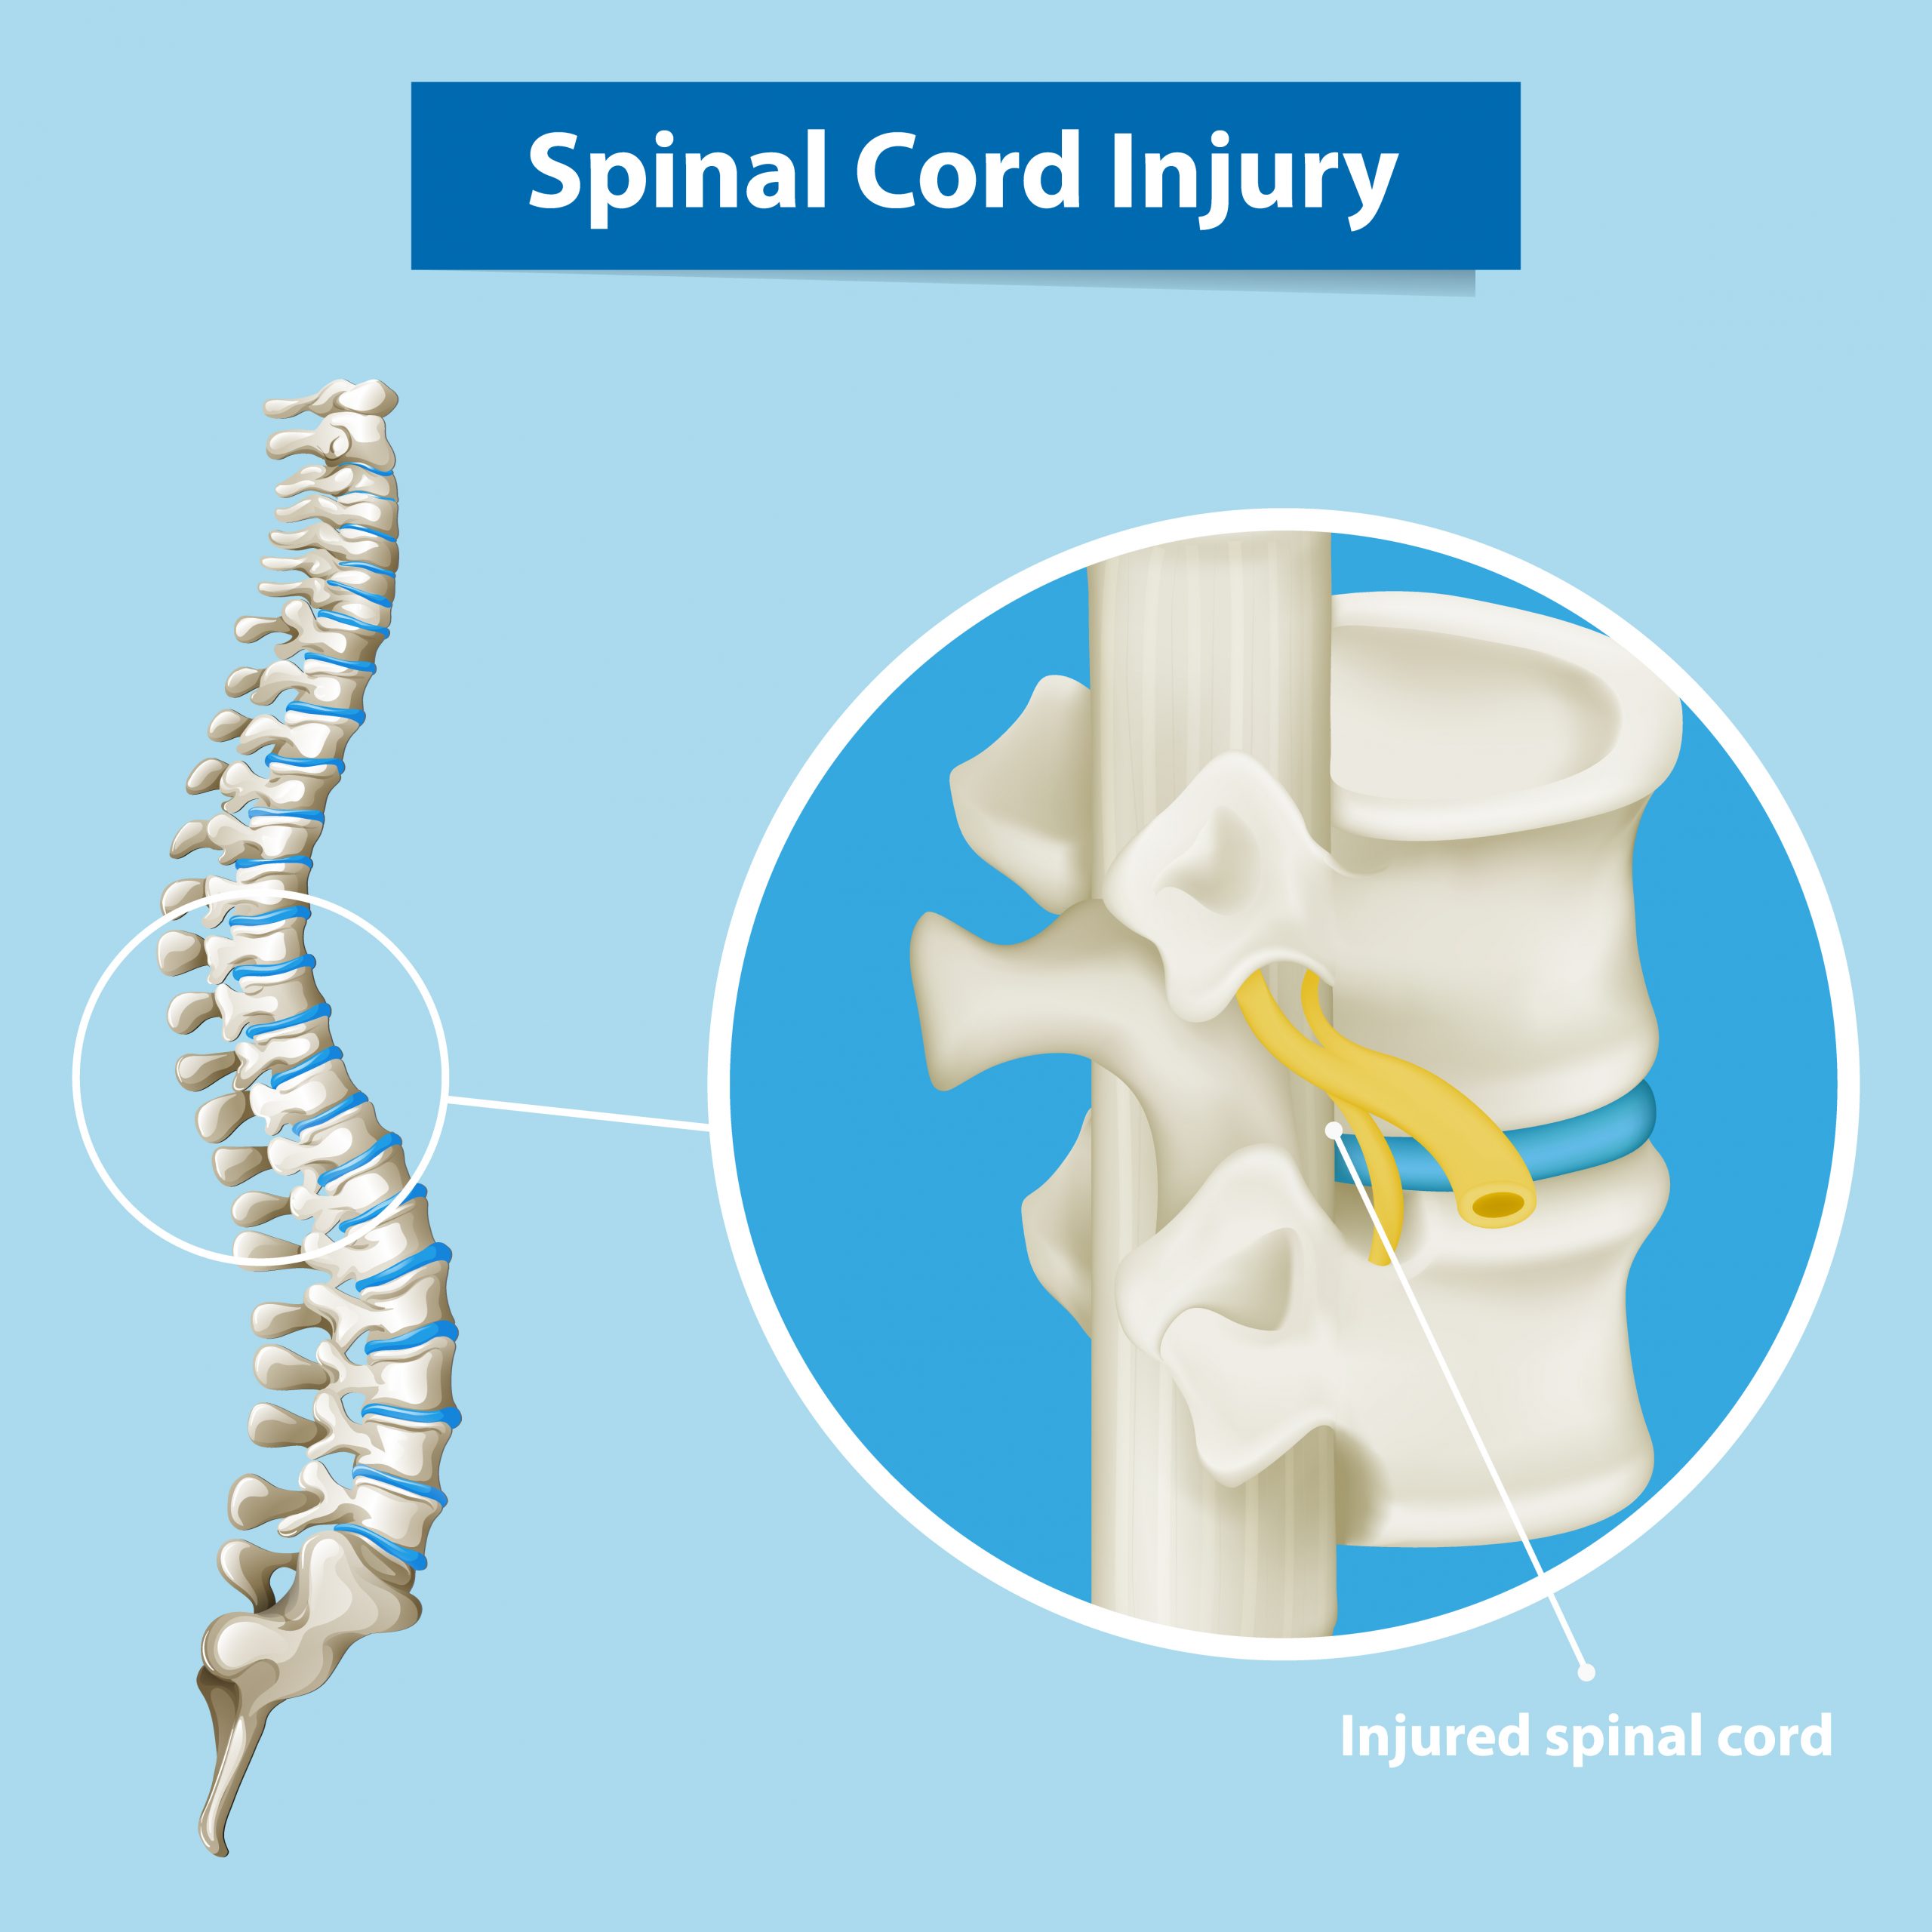 Diagram showing spinal cord injury